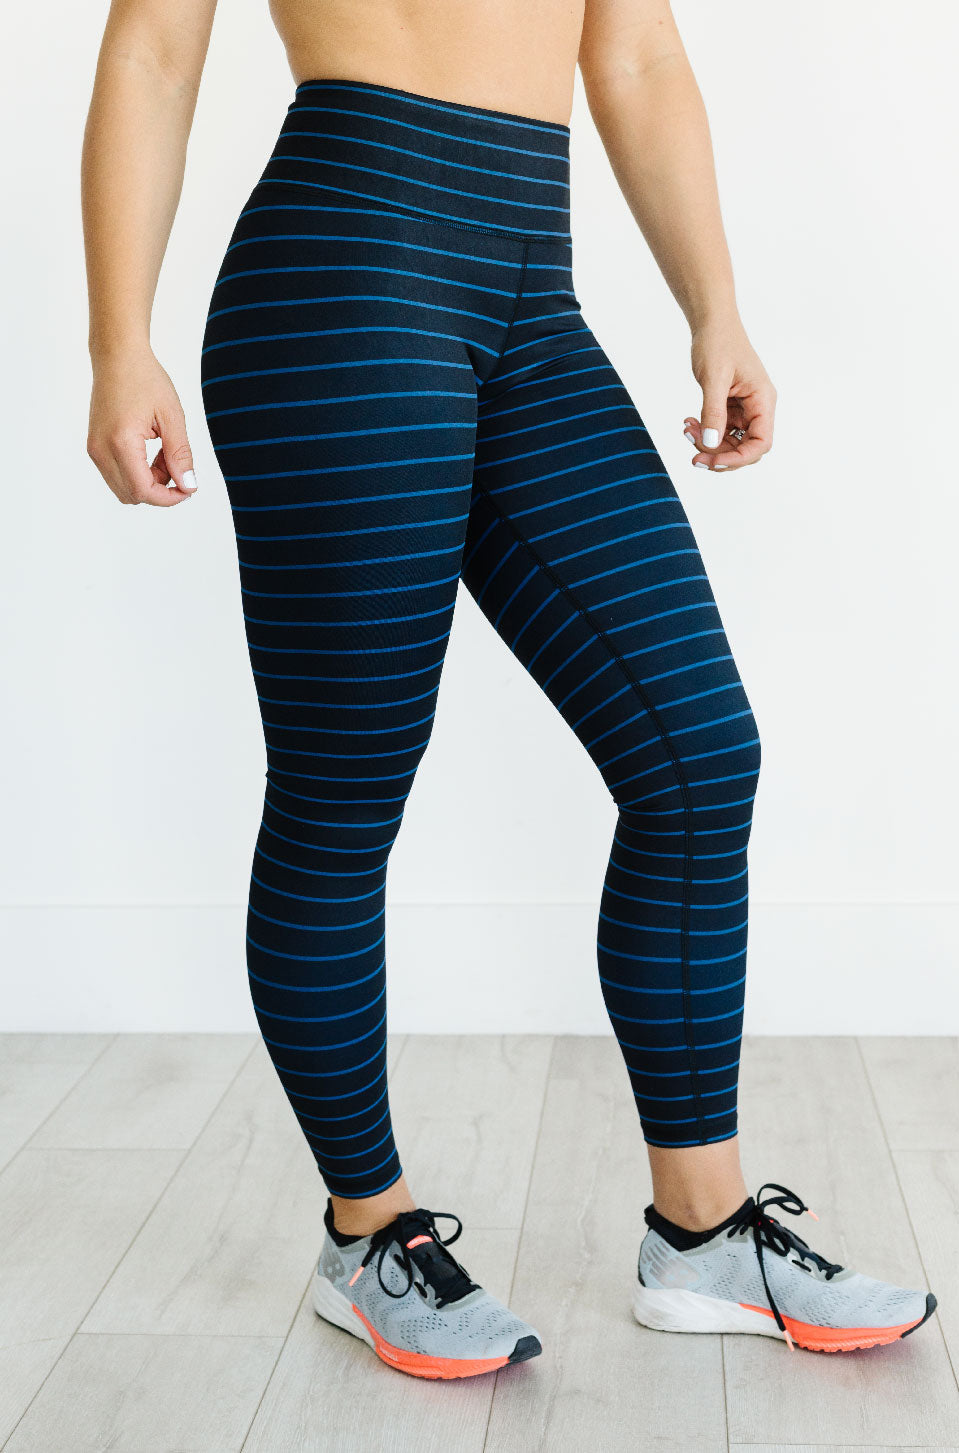 Striped Capri & Legging in Black and Grey [Luxe Fabric]